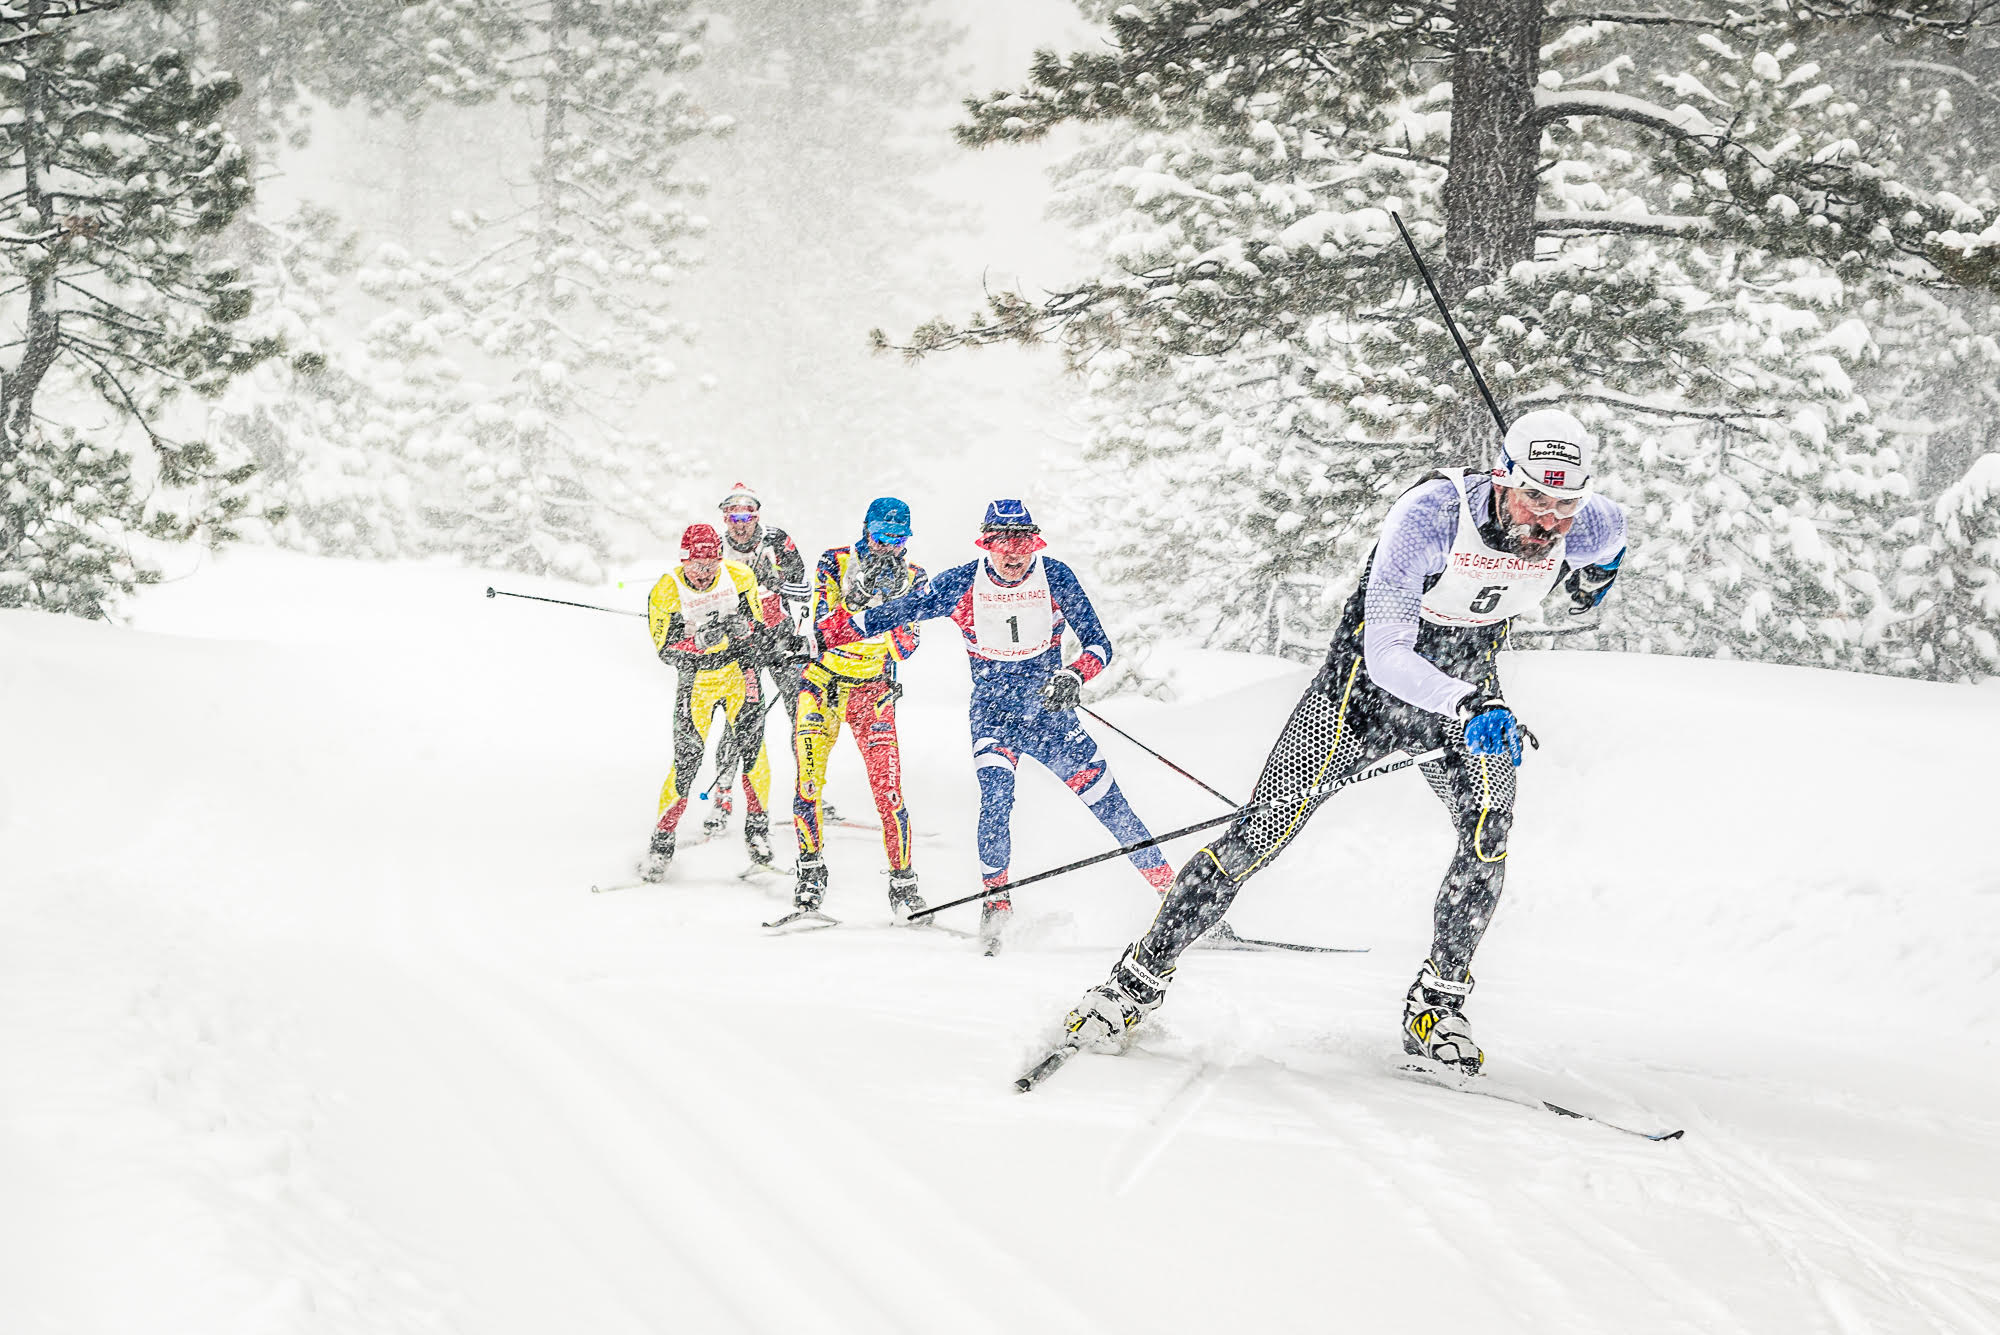 The Great Ski Race 2018